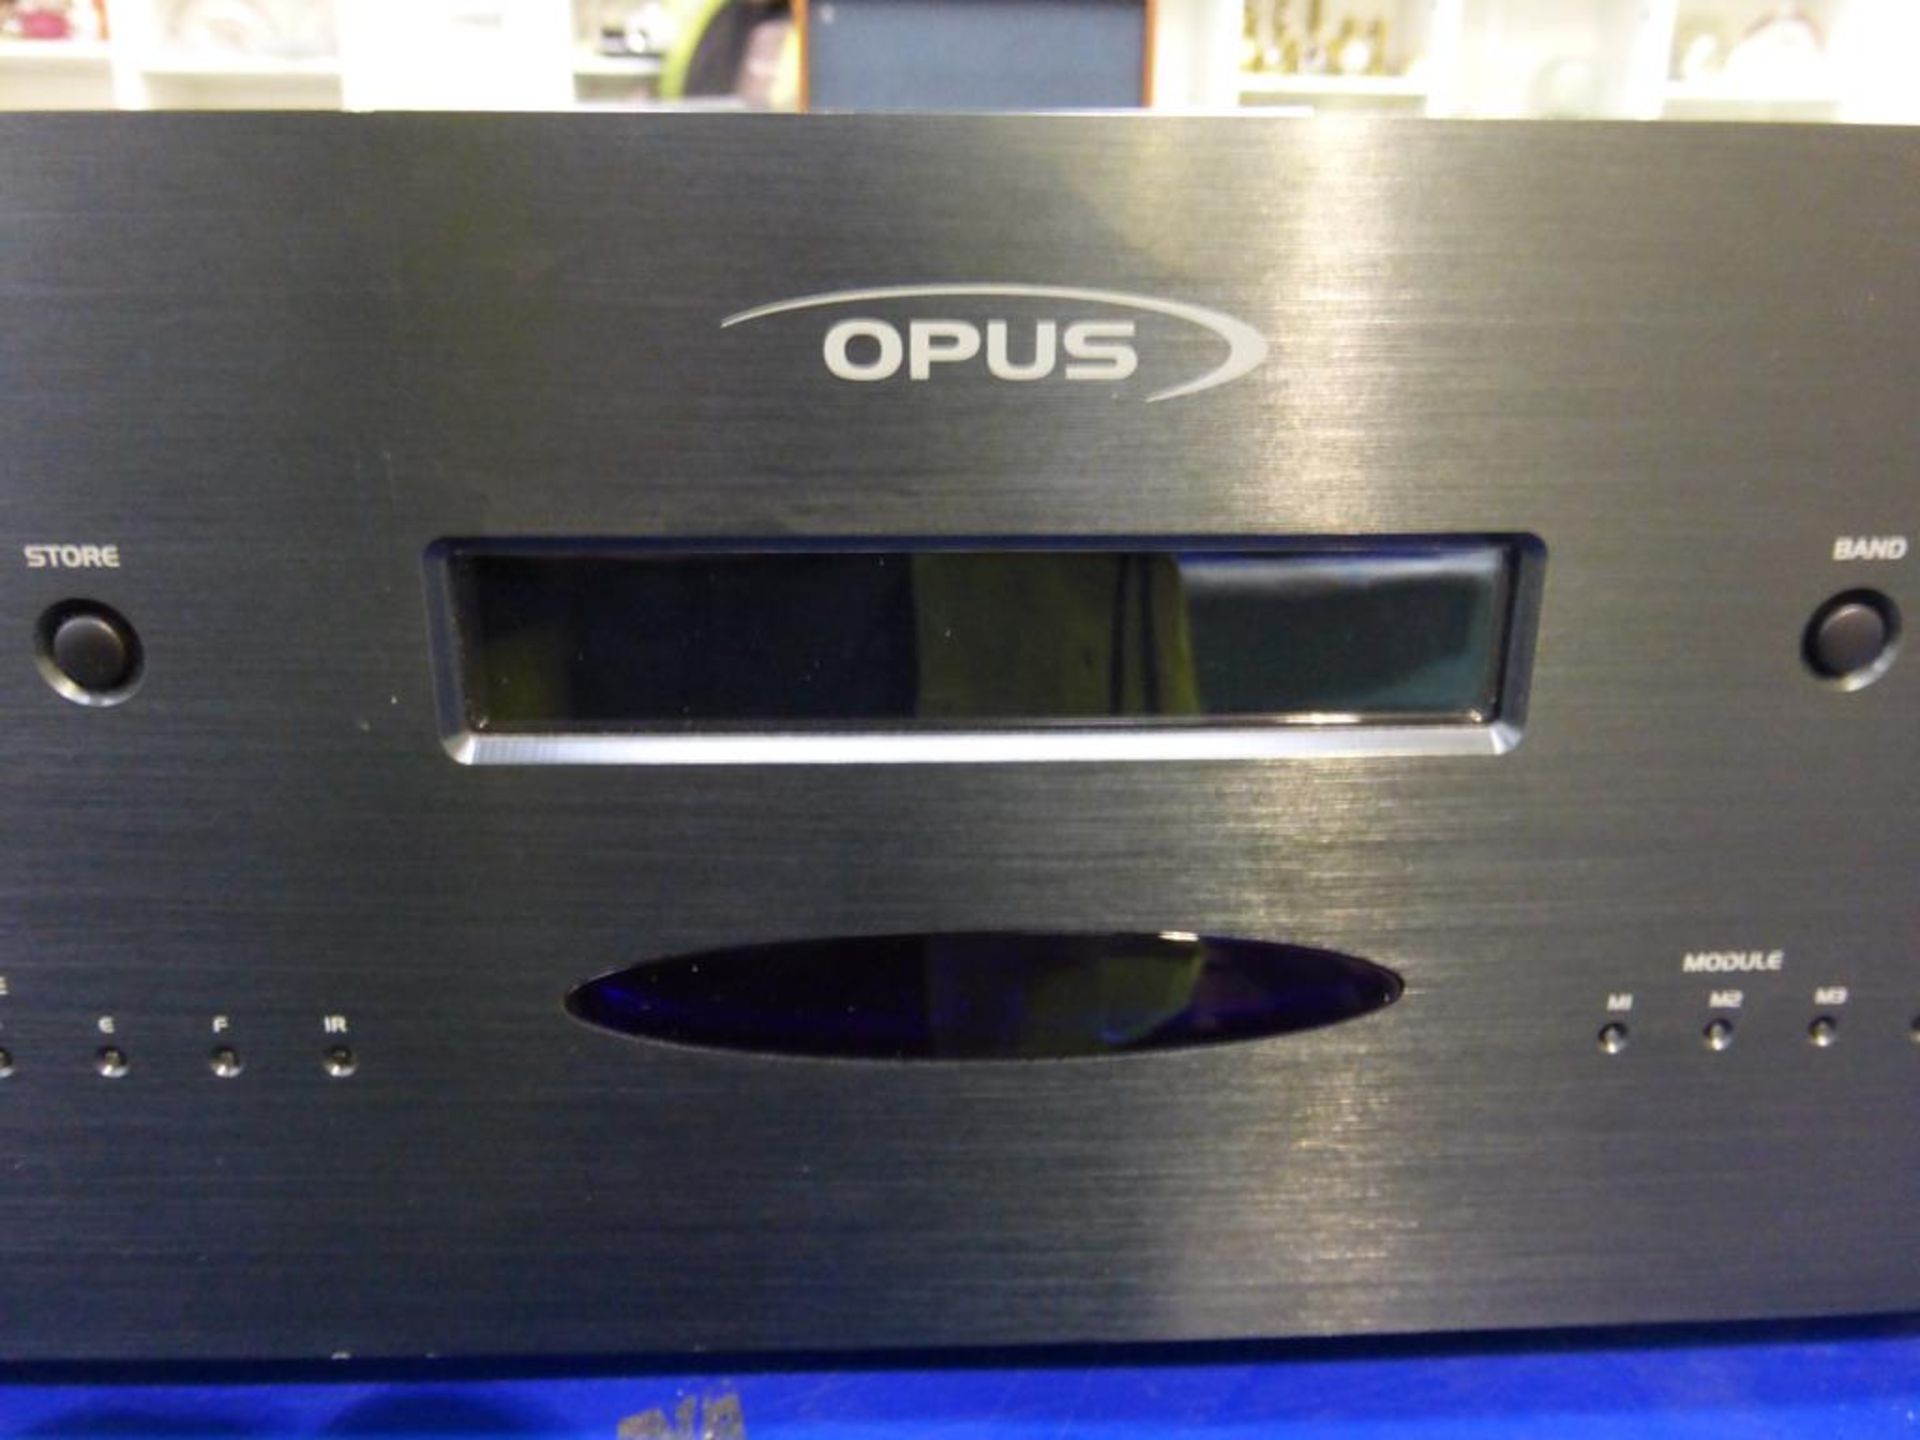 Opus MCU610 - Image 3 of 6